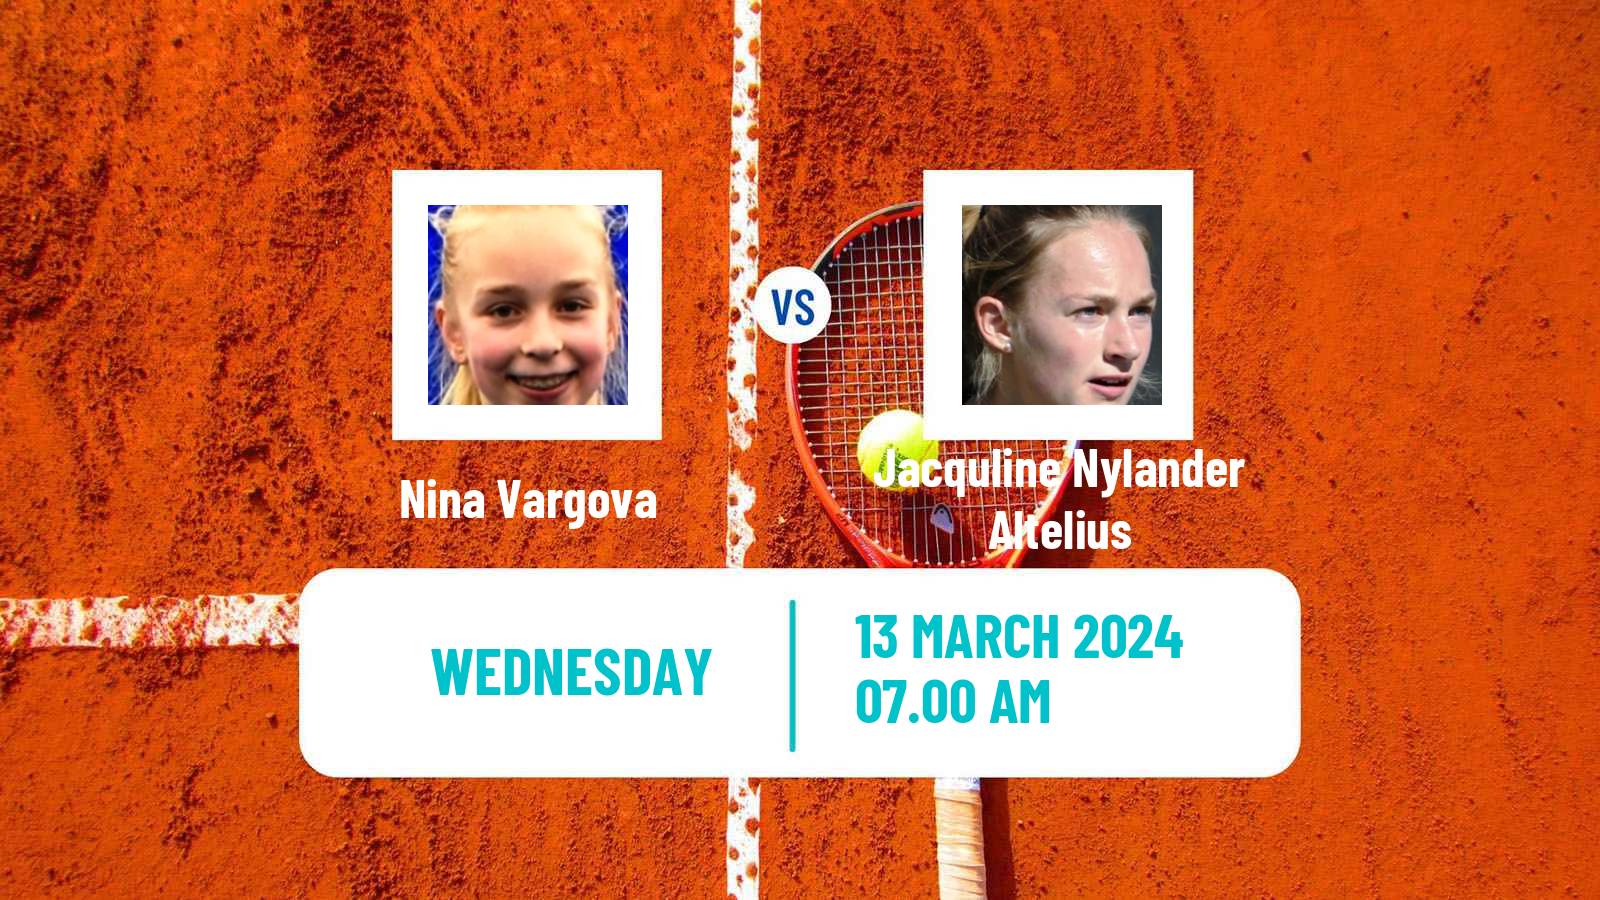 Tennis ITF W15 Heraklion 2 Women Nina Vargova - Jacquline Nylander Altelius